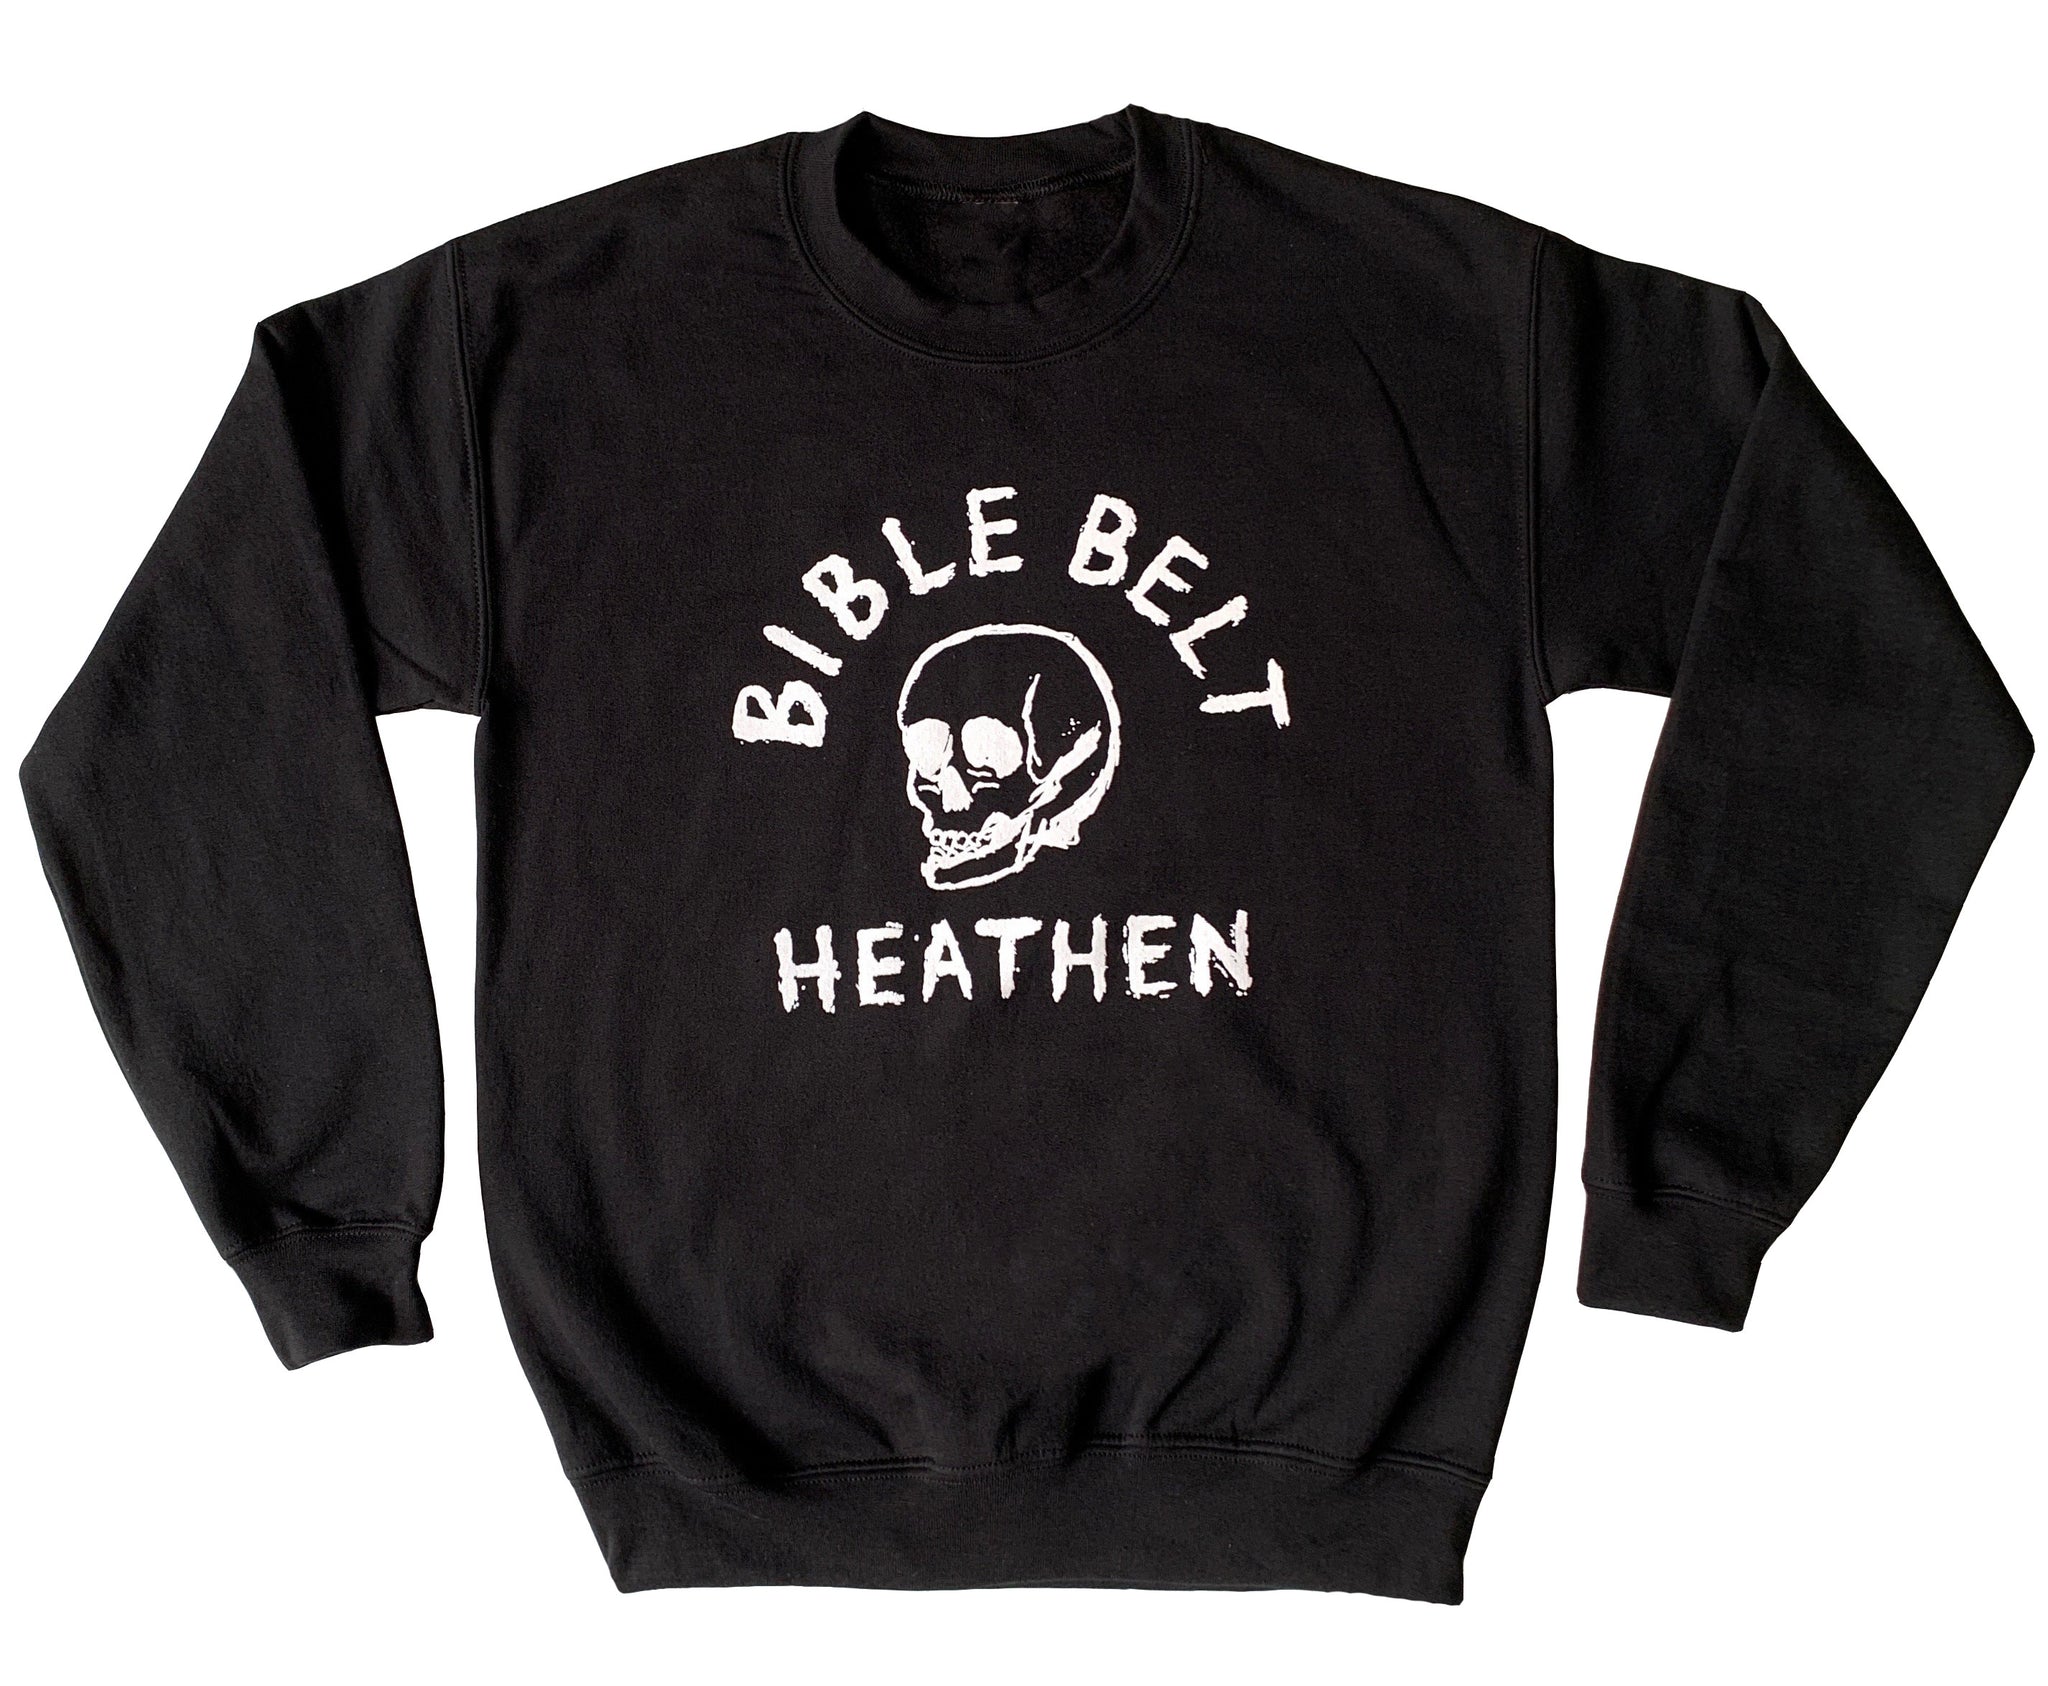 Bible Belt Heathen Sweatshirt